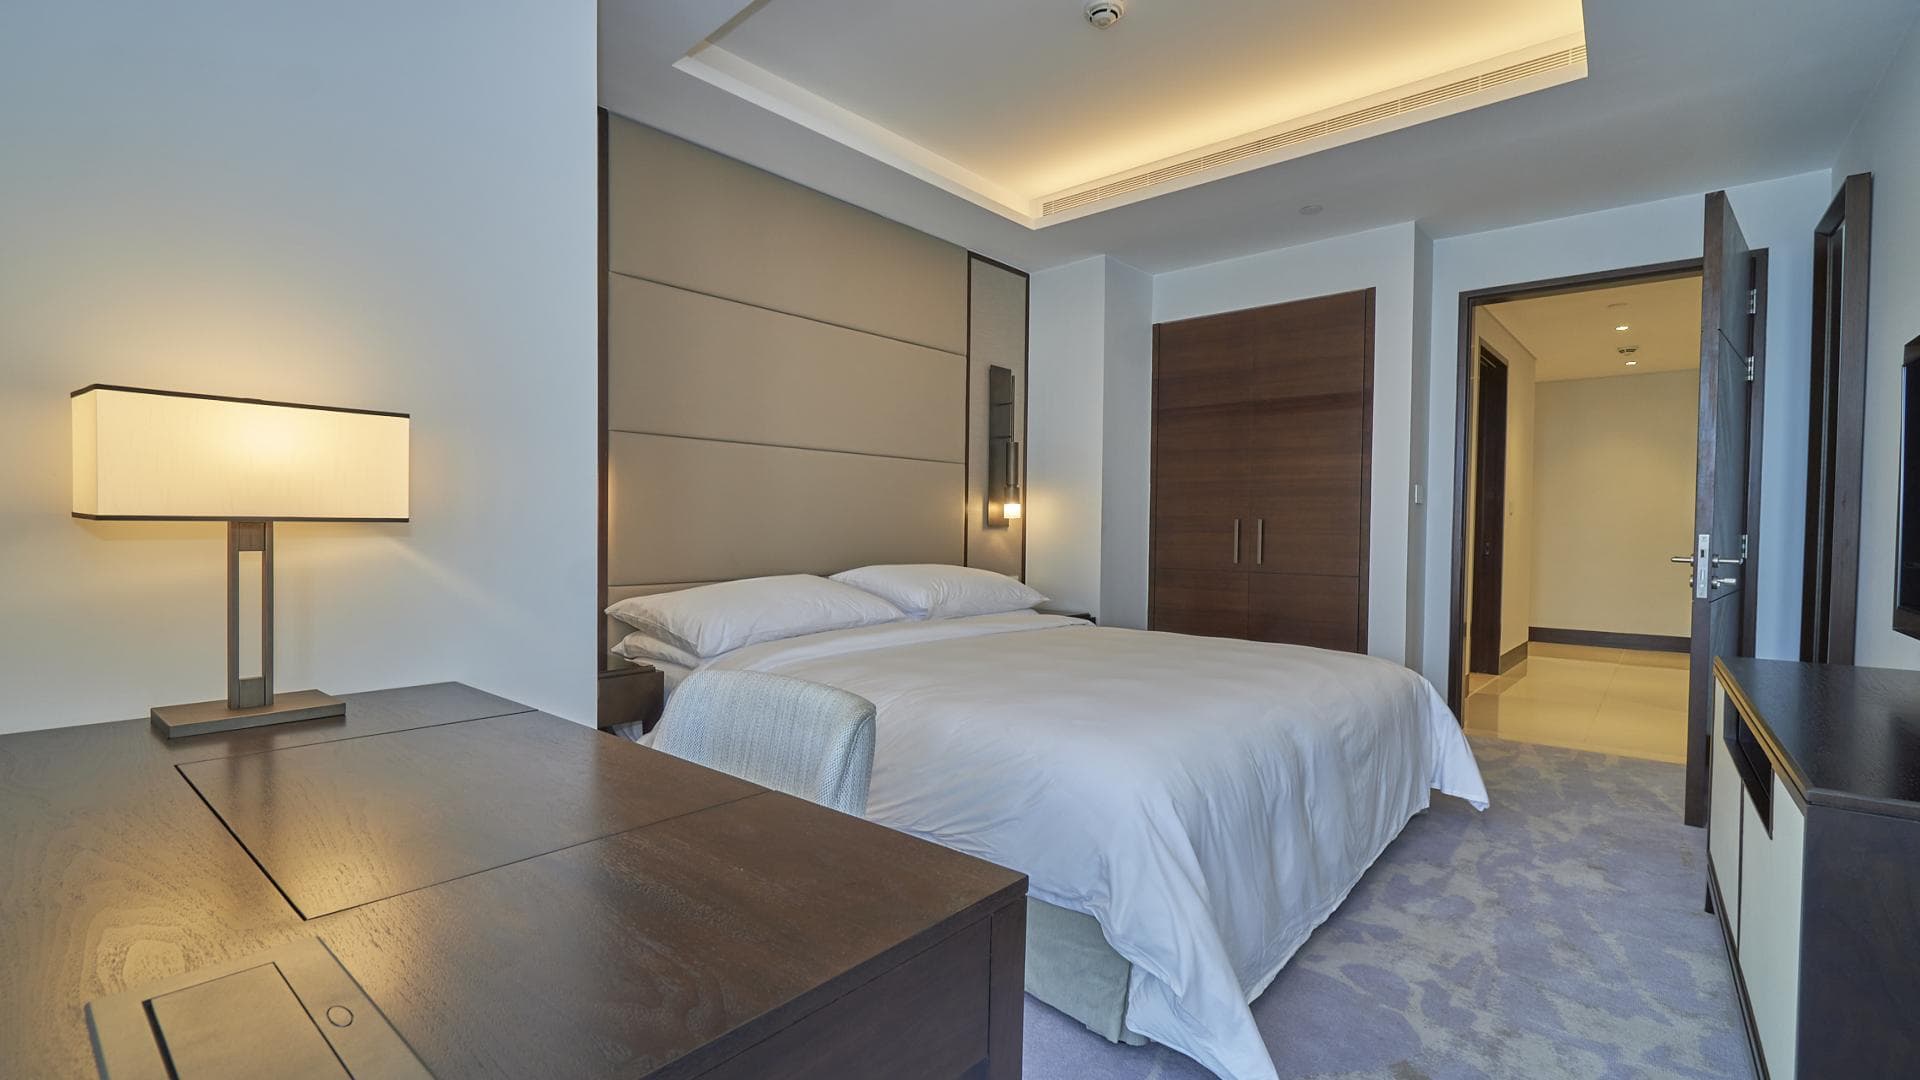 2 Bedroom Apartment For Sale Al Thamam 09 Lp36447 25faef9226f6ce00.jpg